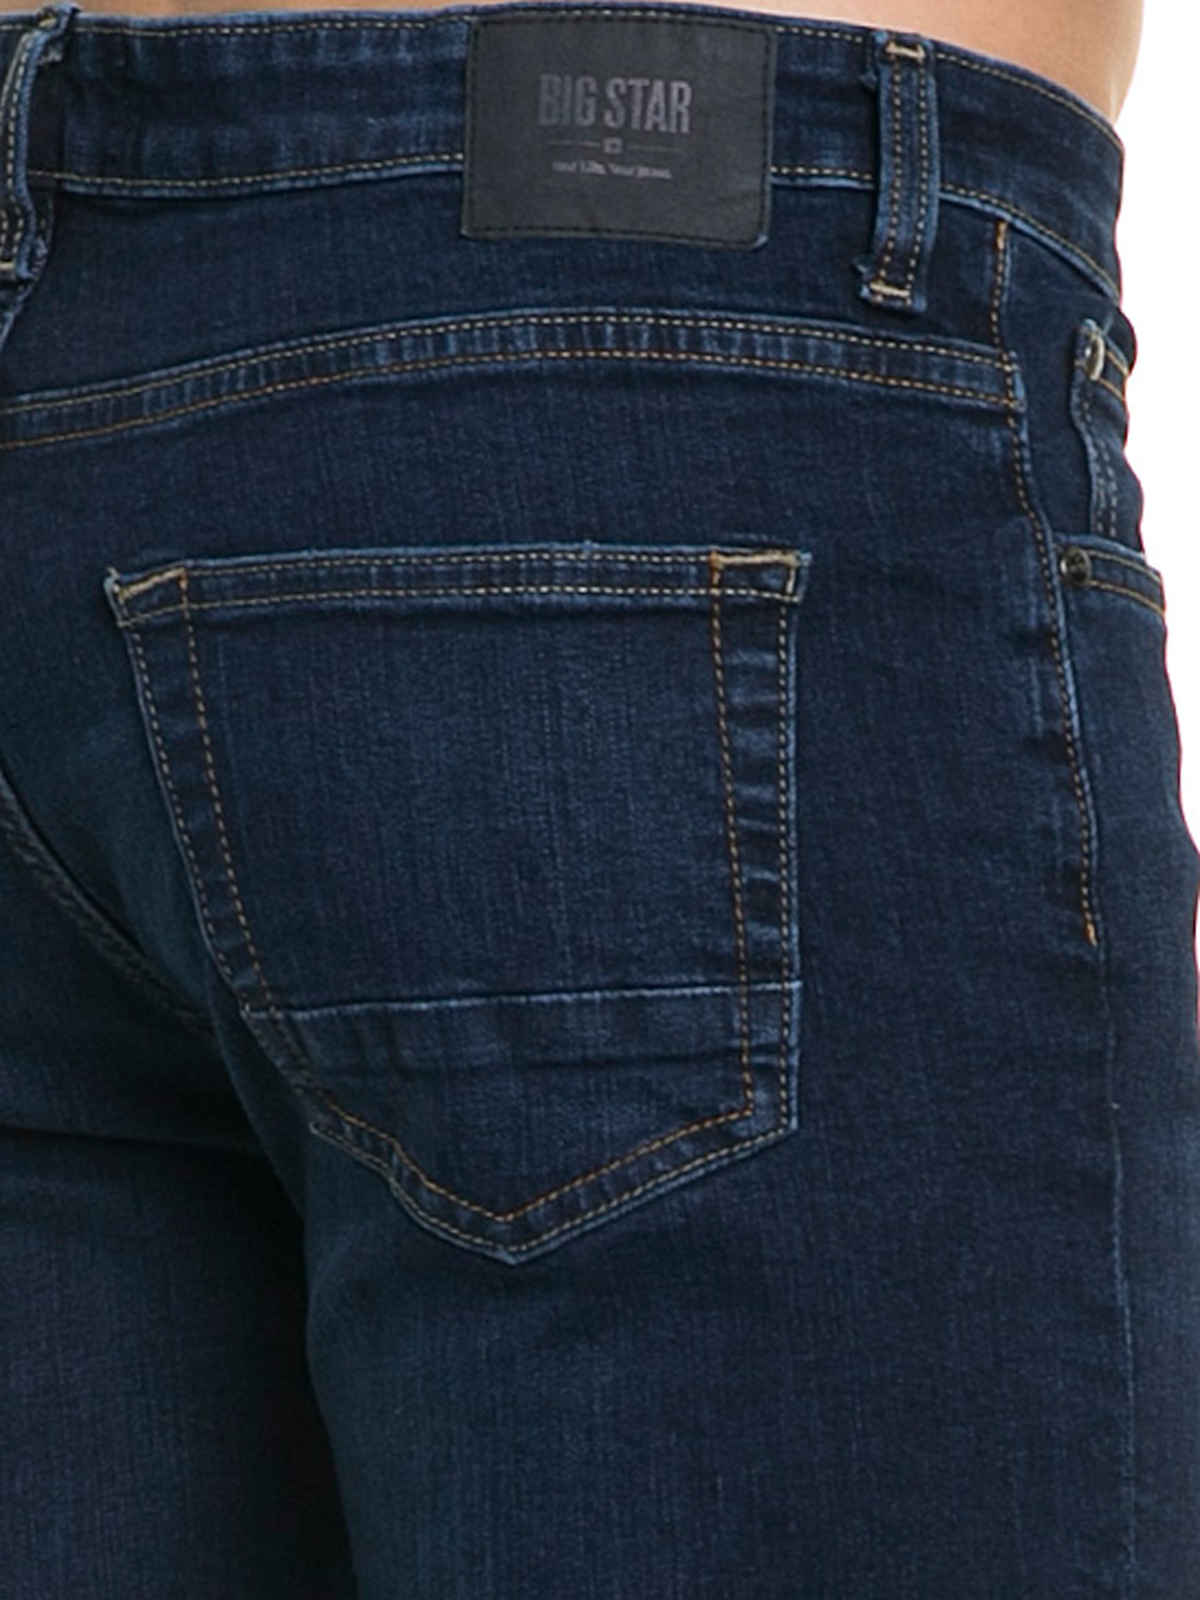 Big Star Slim Fit Jeans Pants J | eBay